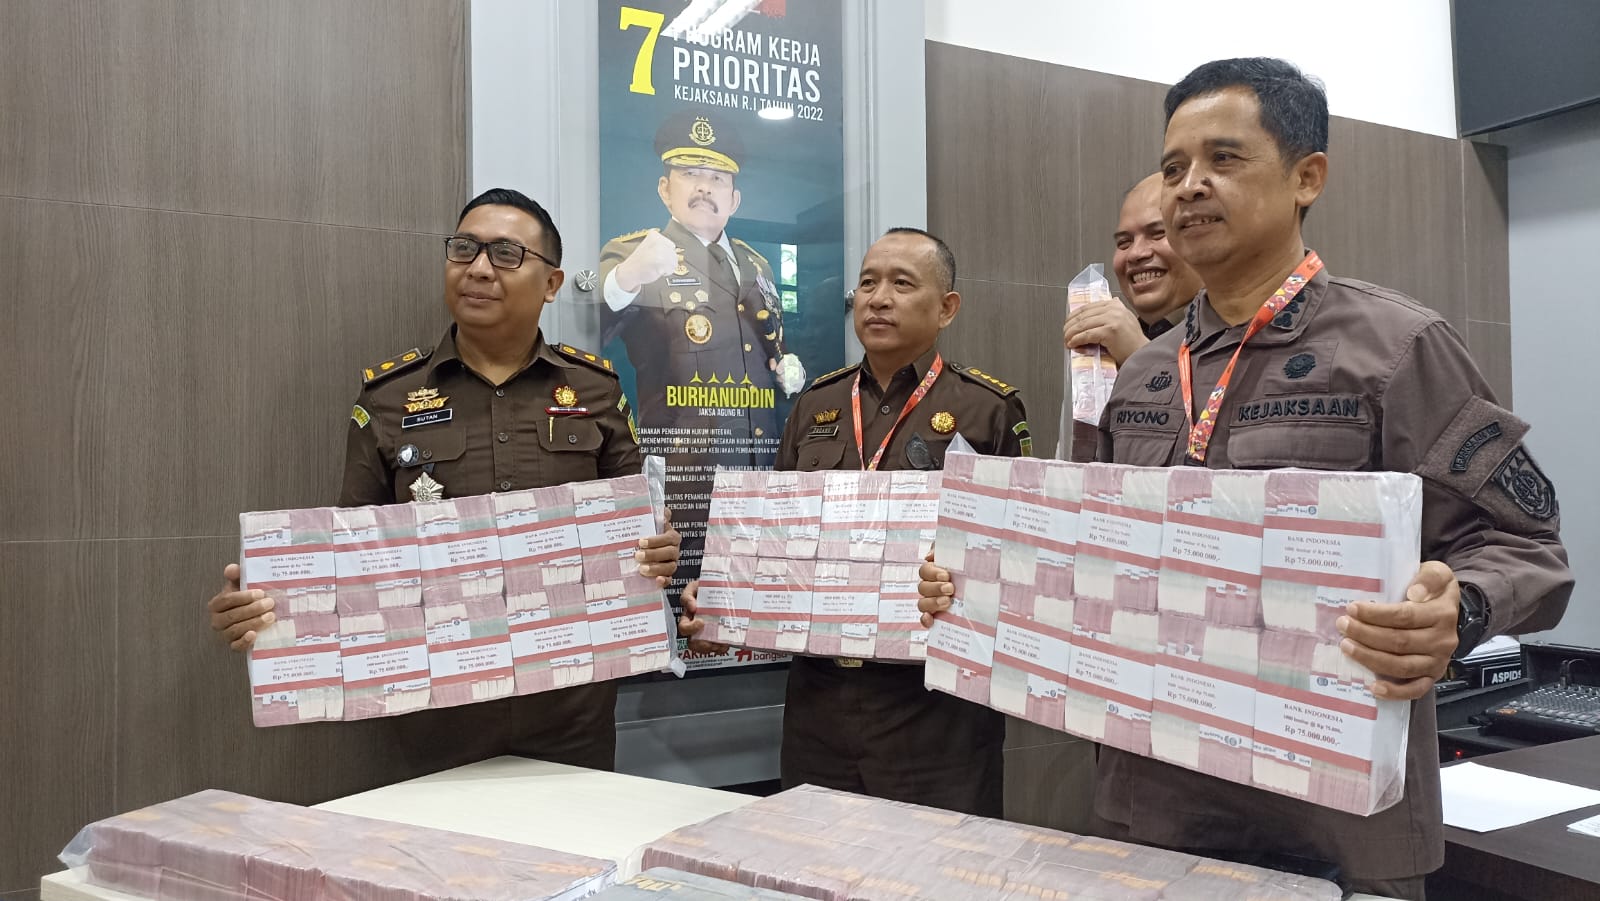 Kejaksaan Negeri Tinggi Jawa Barat (Kejati Jabar) kini telah berhasil mengamankan uang senilai Rp 6,5 Miliar dari kasus tindak pidana korupsi